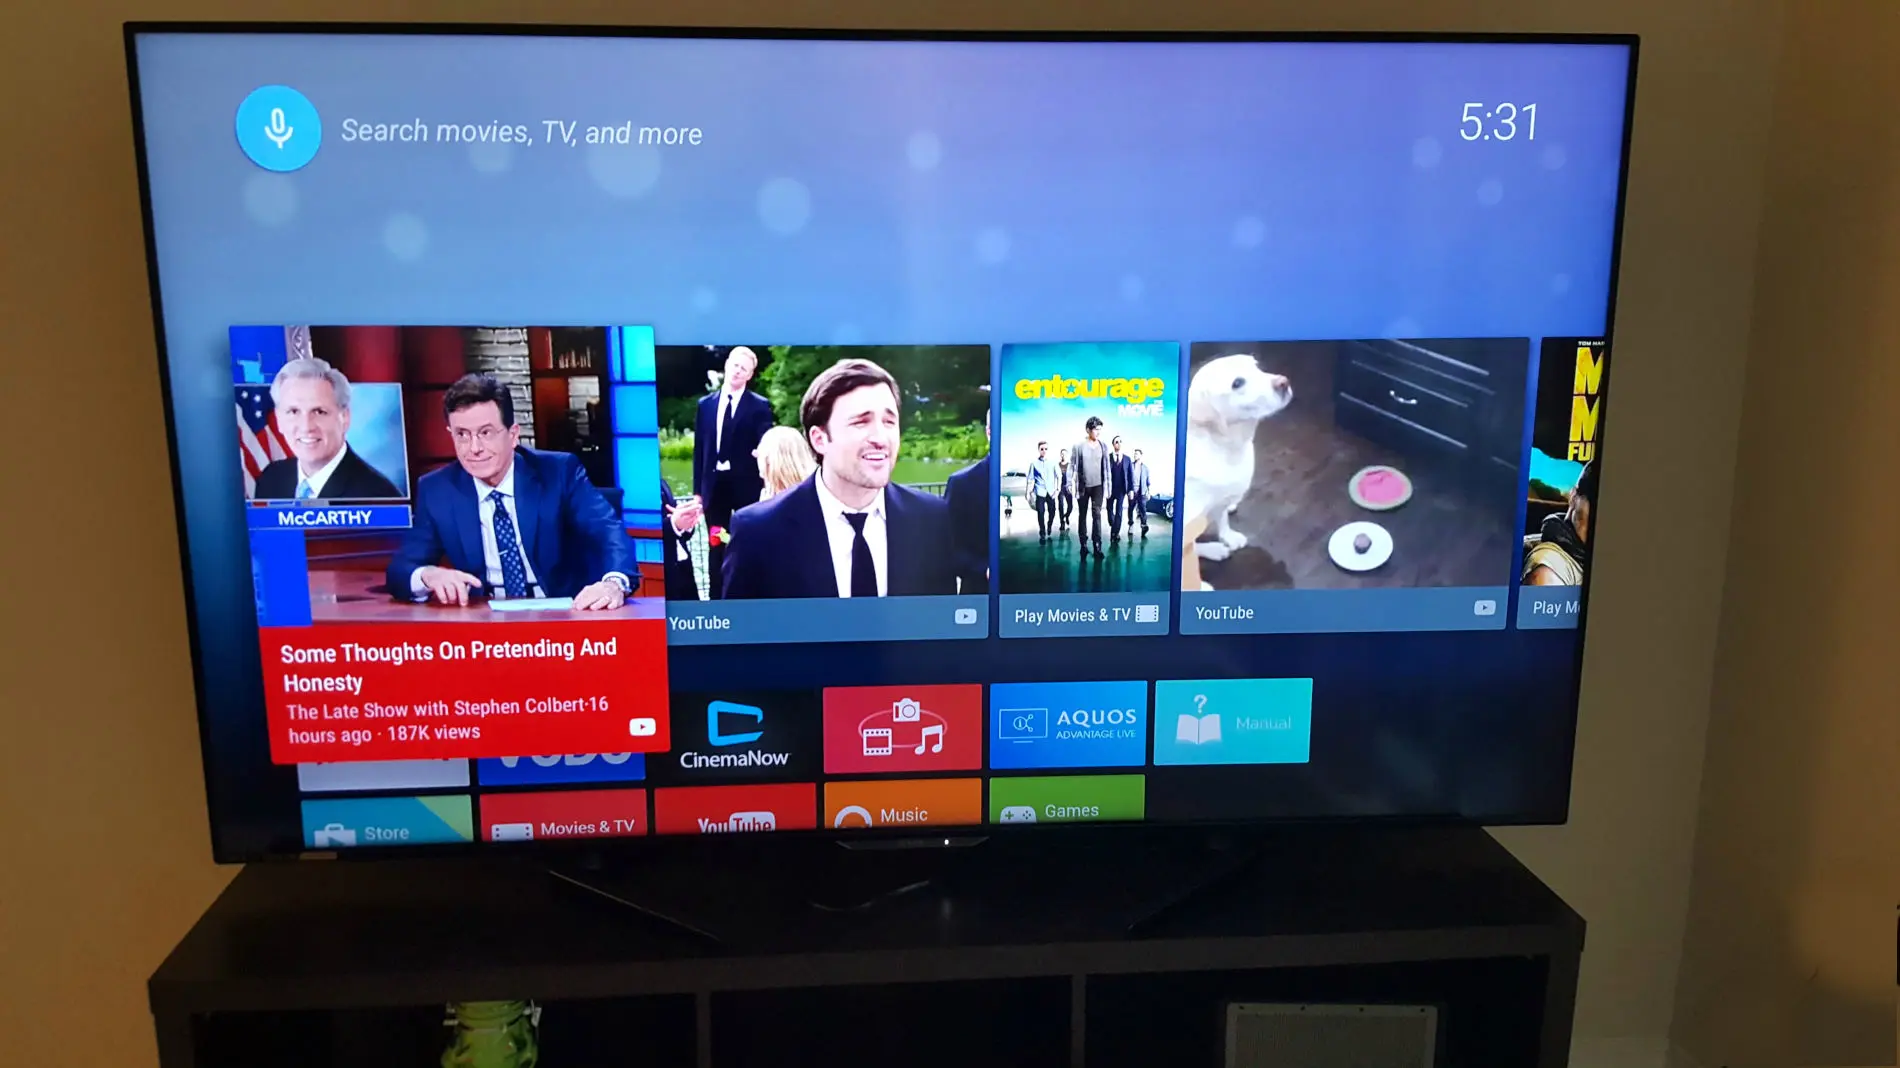 Android TV continúa mejorando